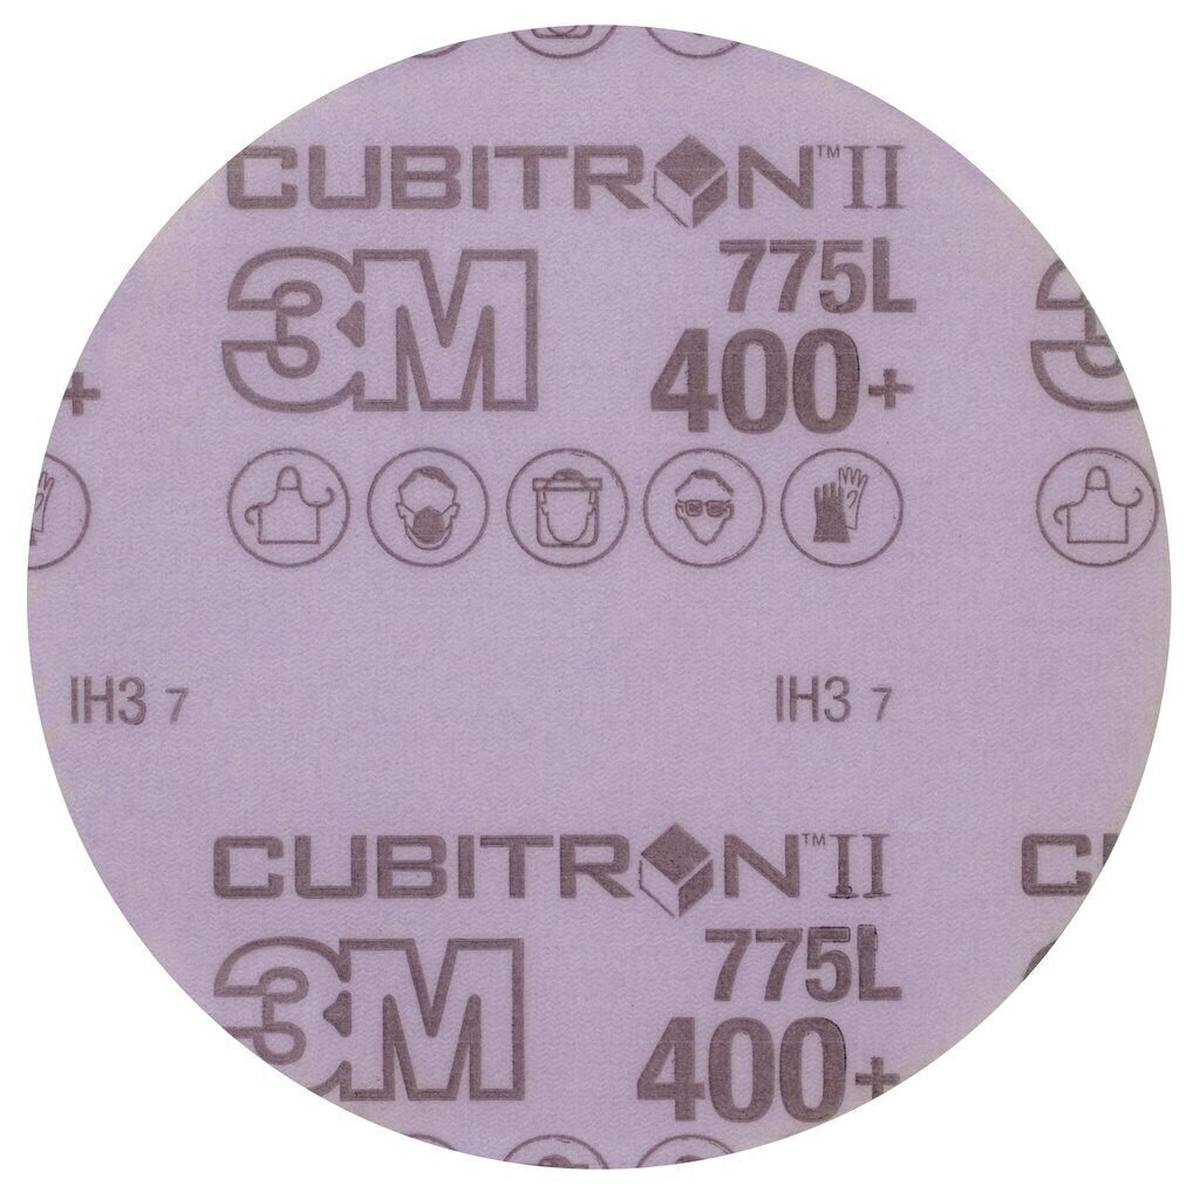 3M Cubitron II Hookit film disc 775L, 125 mm, 400+, unperforated #05055